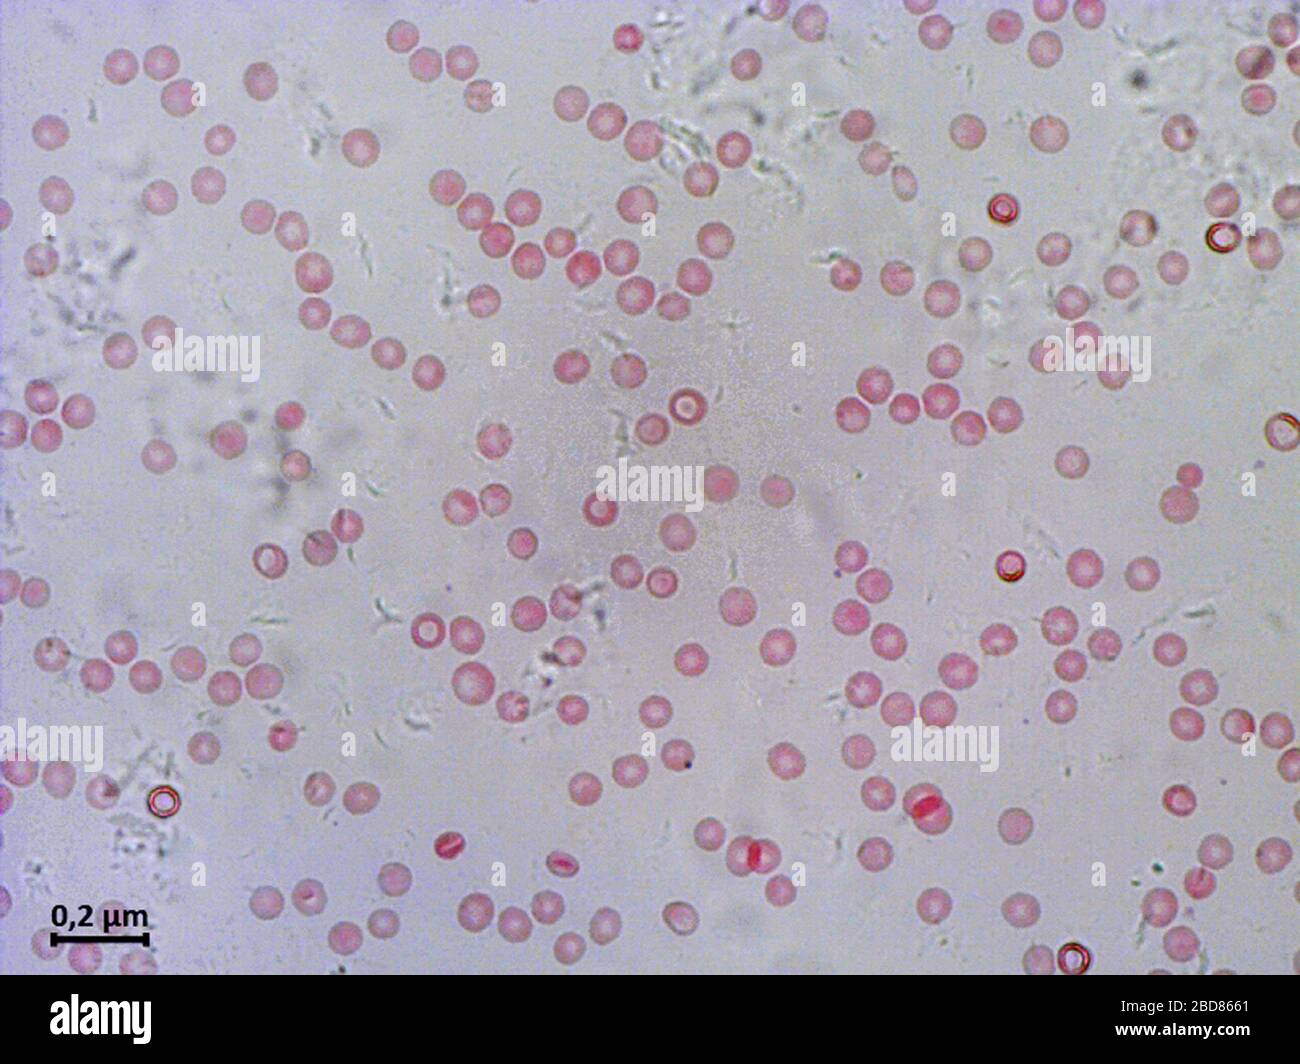 human blood smear, 2000x Stock Photo